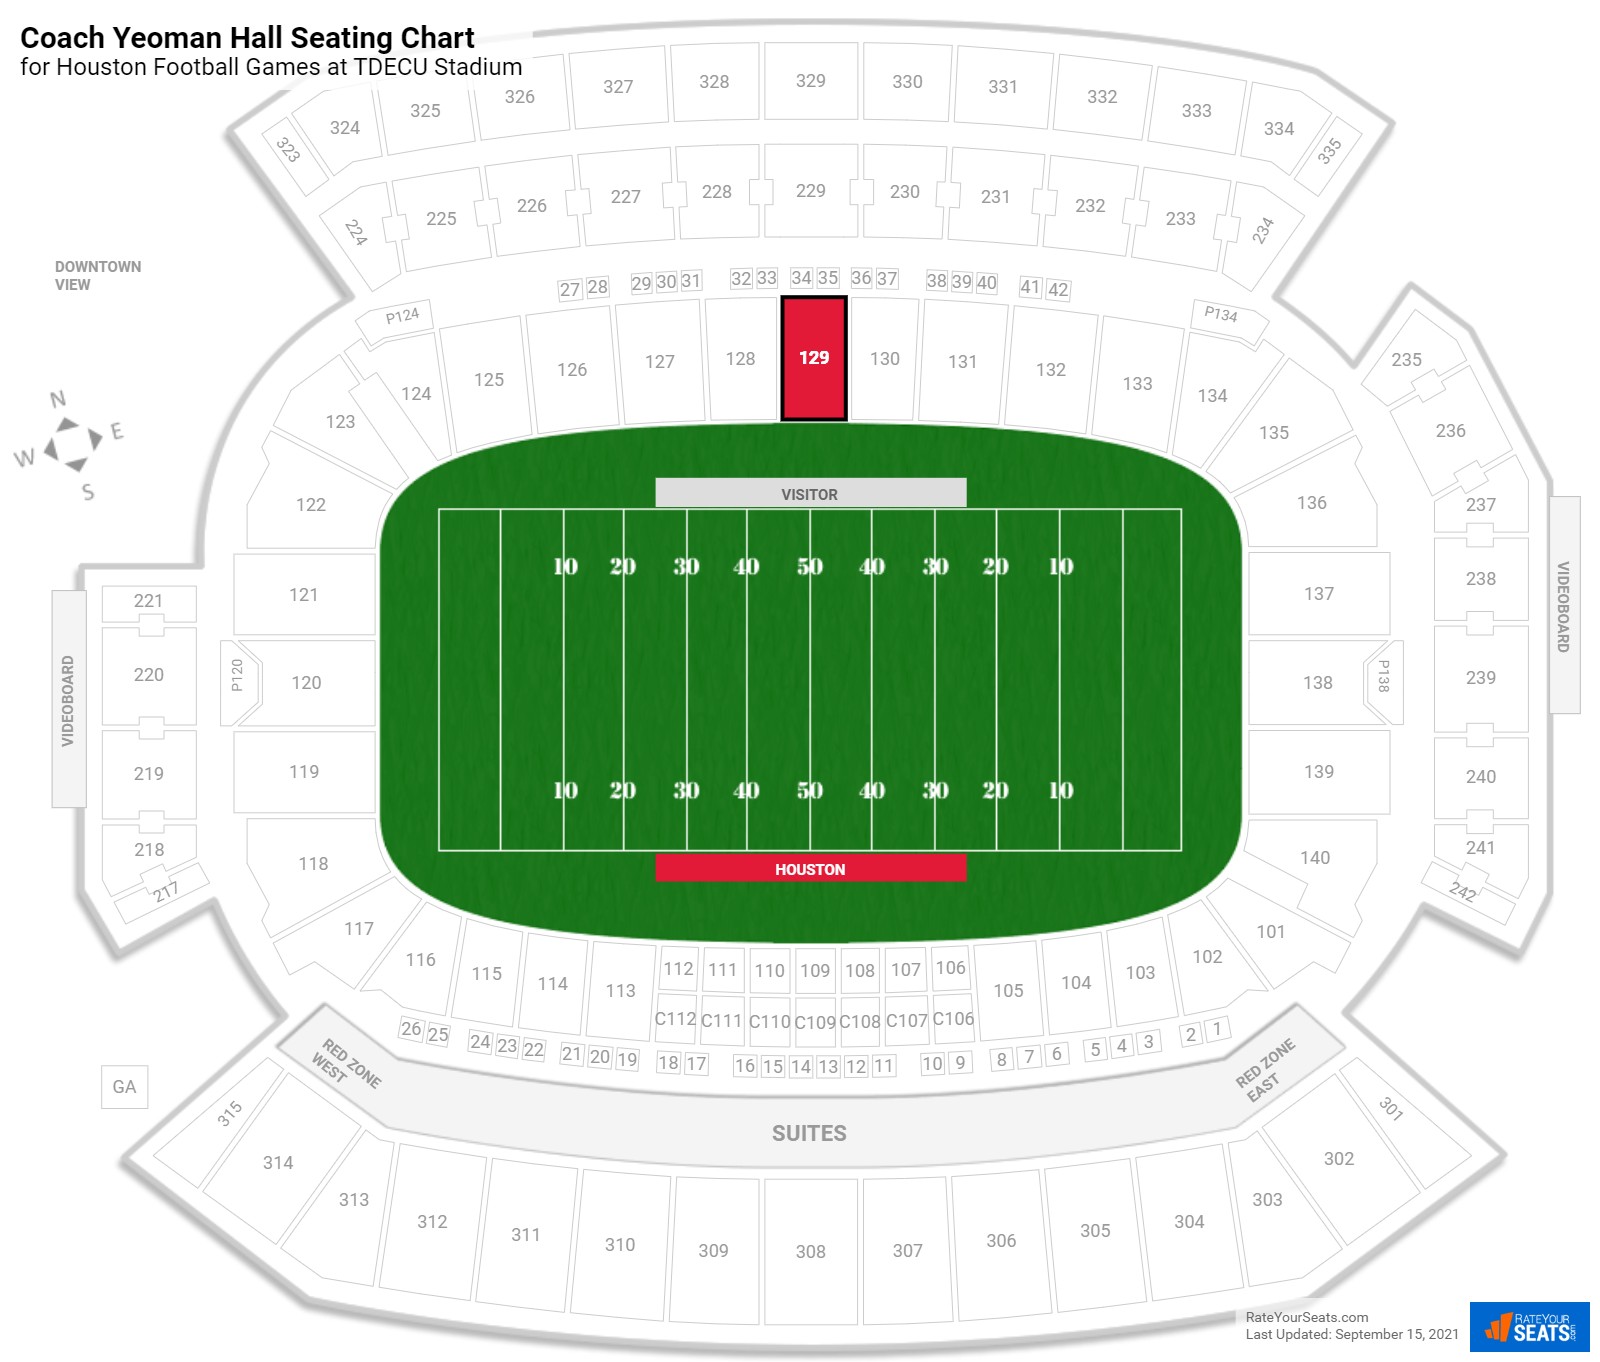 Houston Coach Yeoman Hall Seating Chart at TDECU Stadium